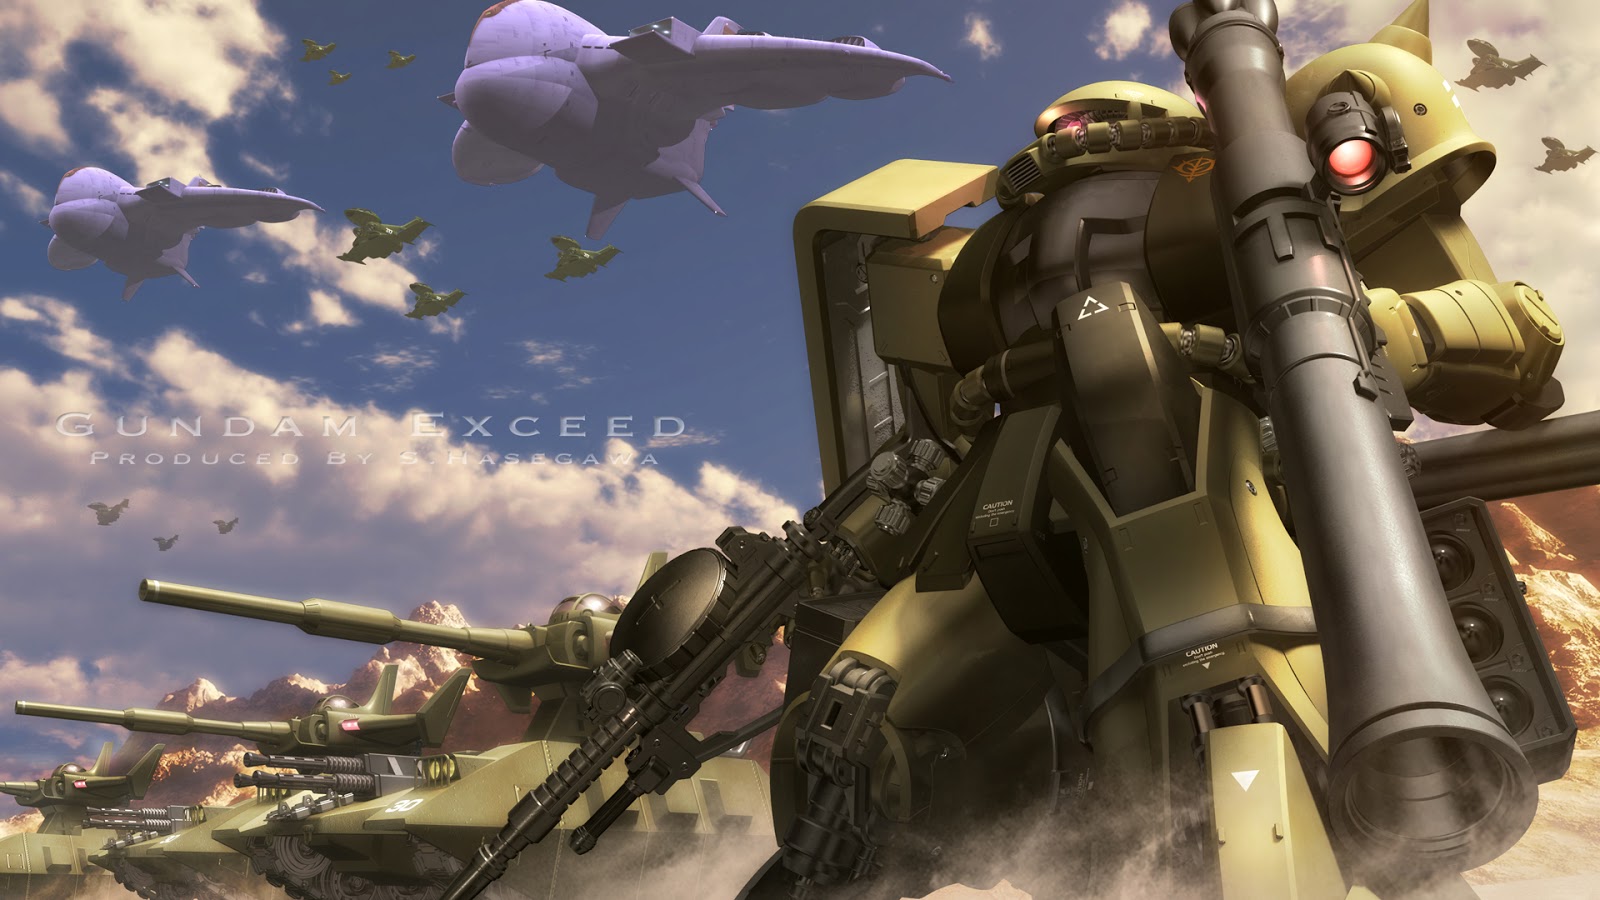 Gundam Exceed Wallpapers Image Gallery